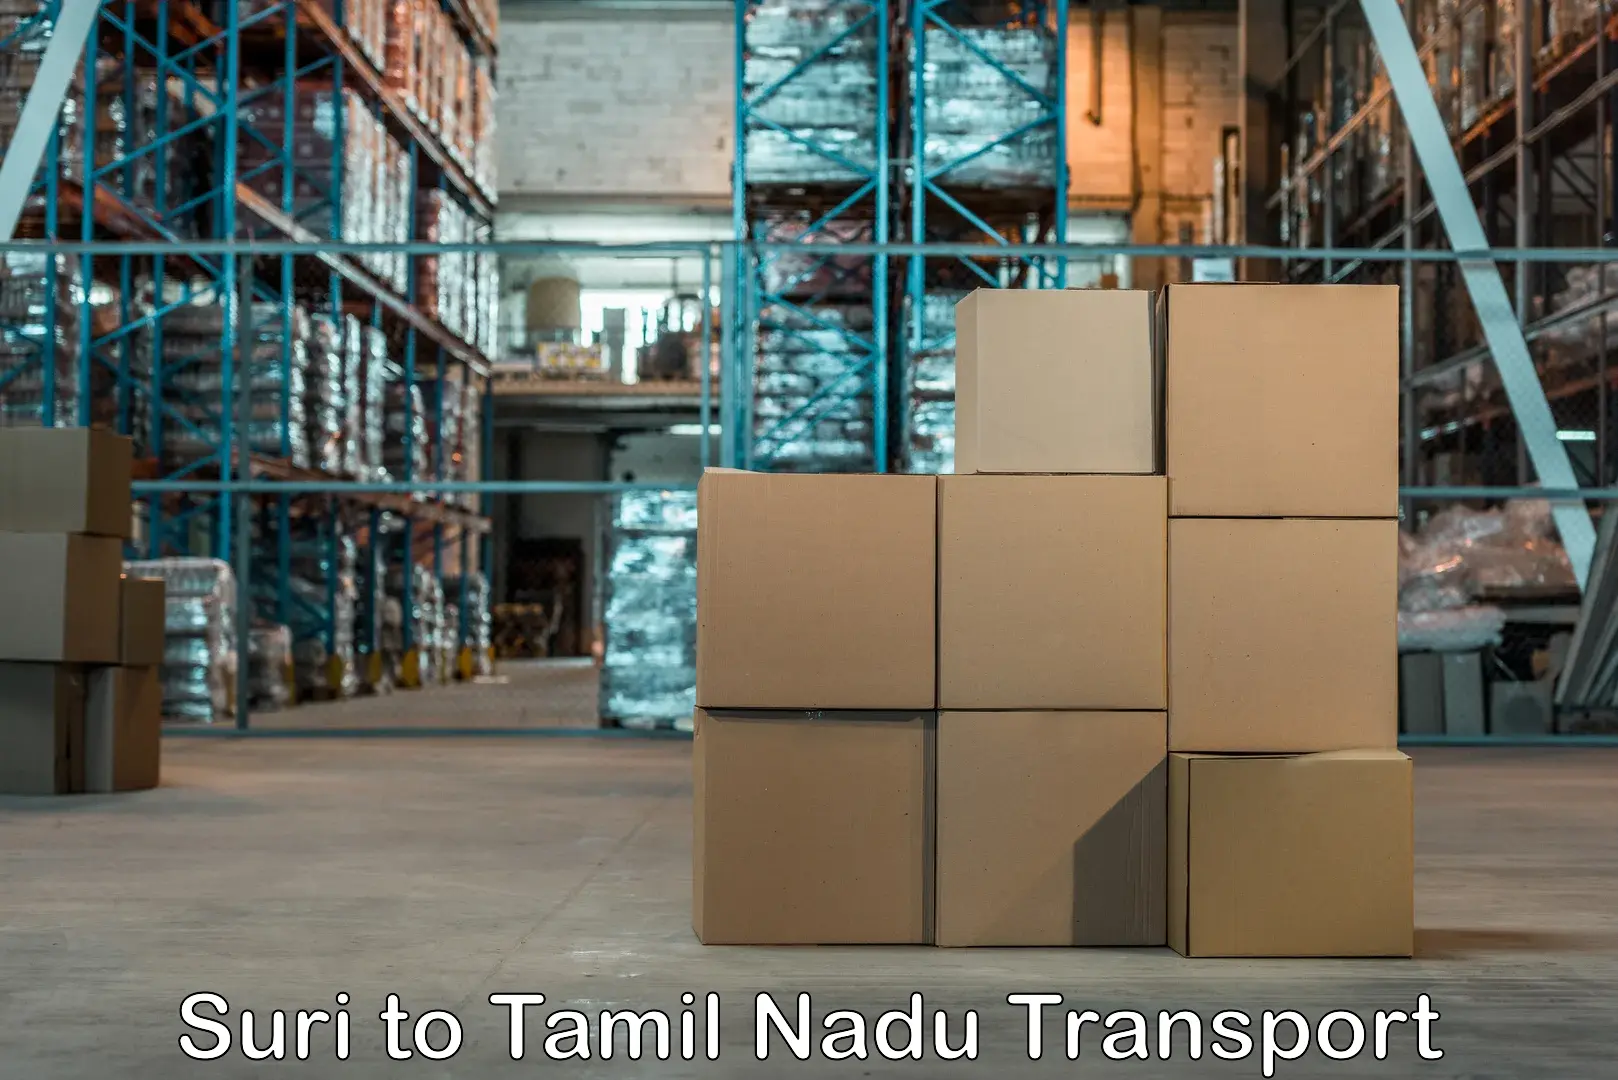 Sending bike to another city Suri to Tamil Nadu